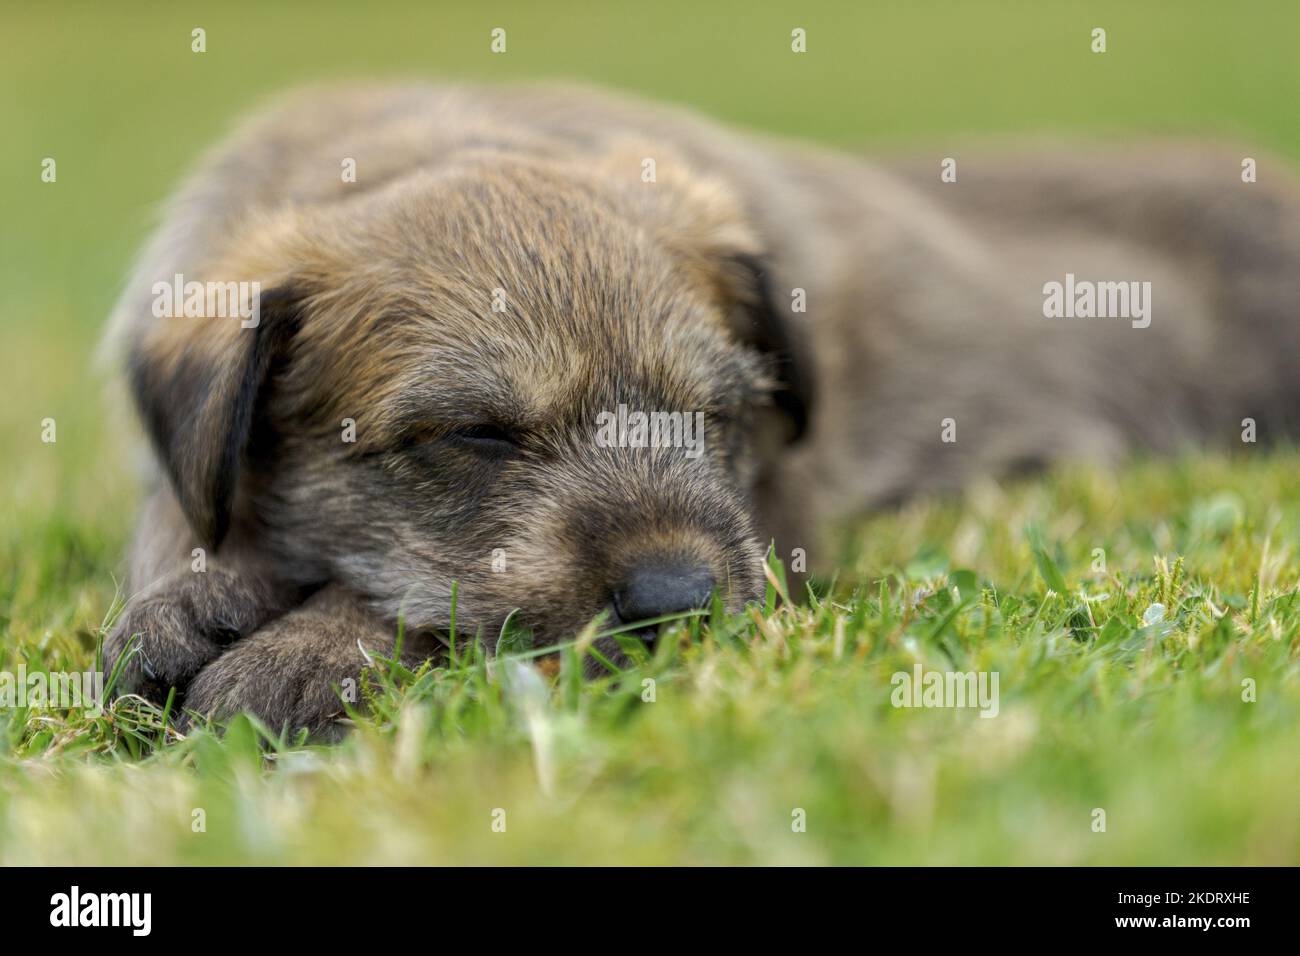 sleeping Berger Picard Dog Puppy Stock Photo